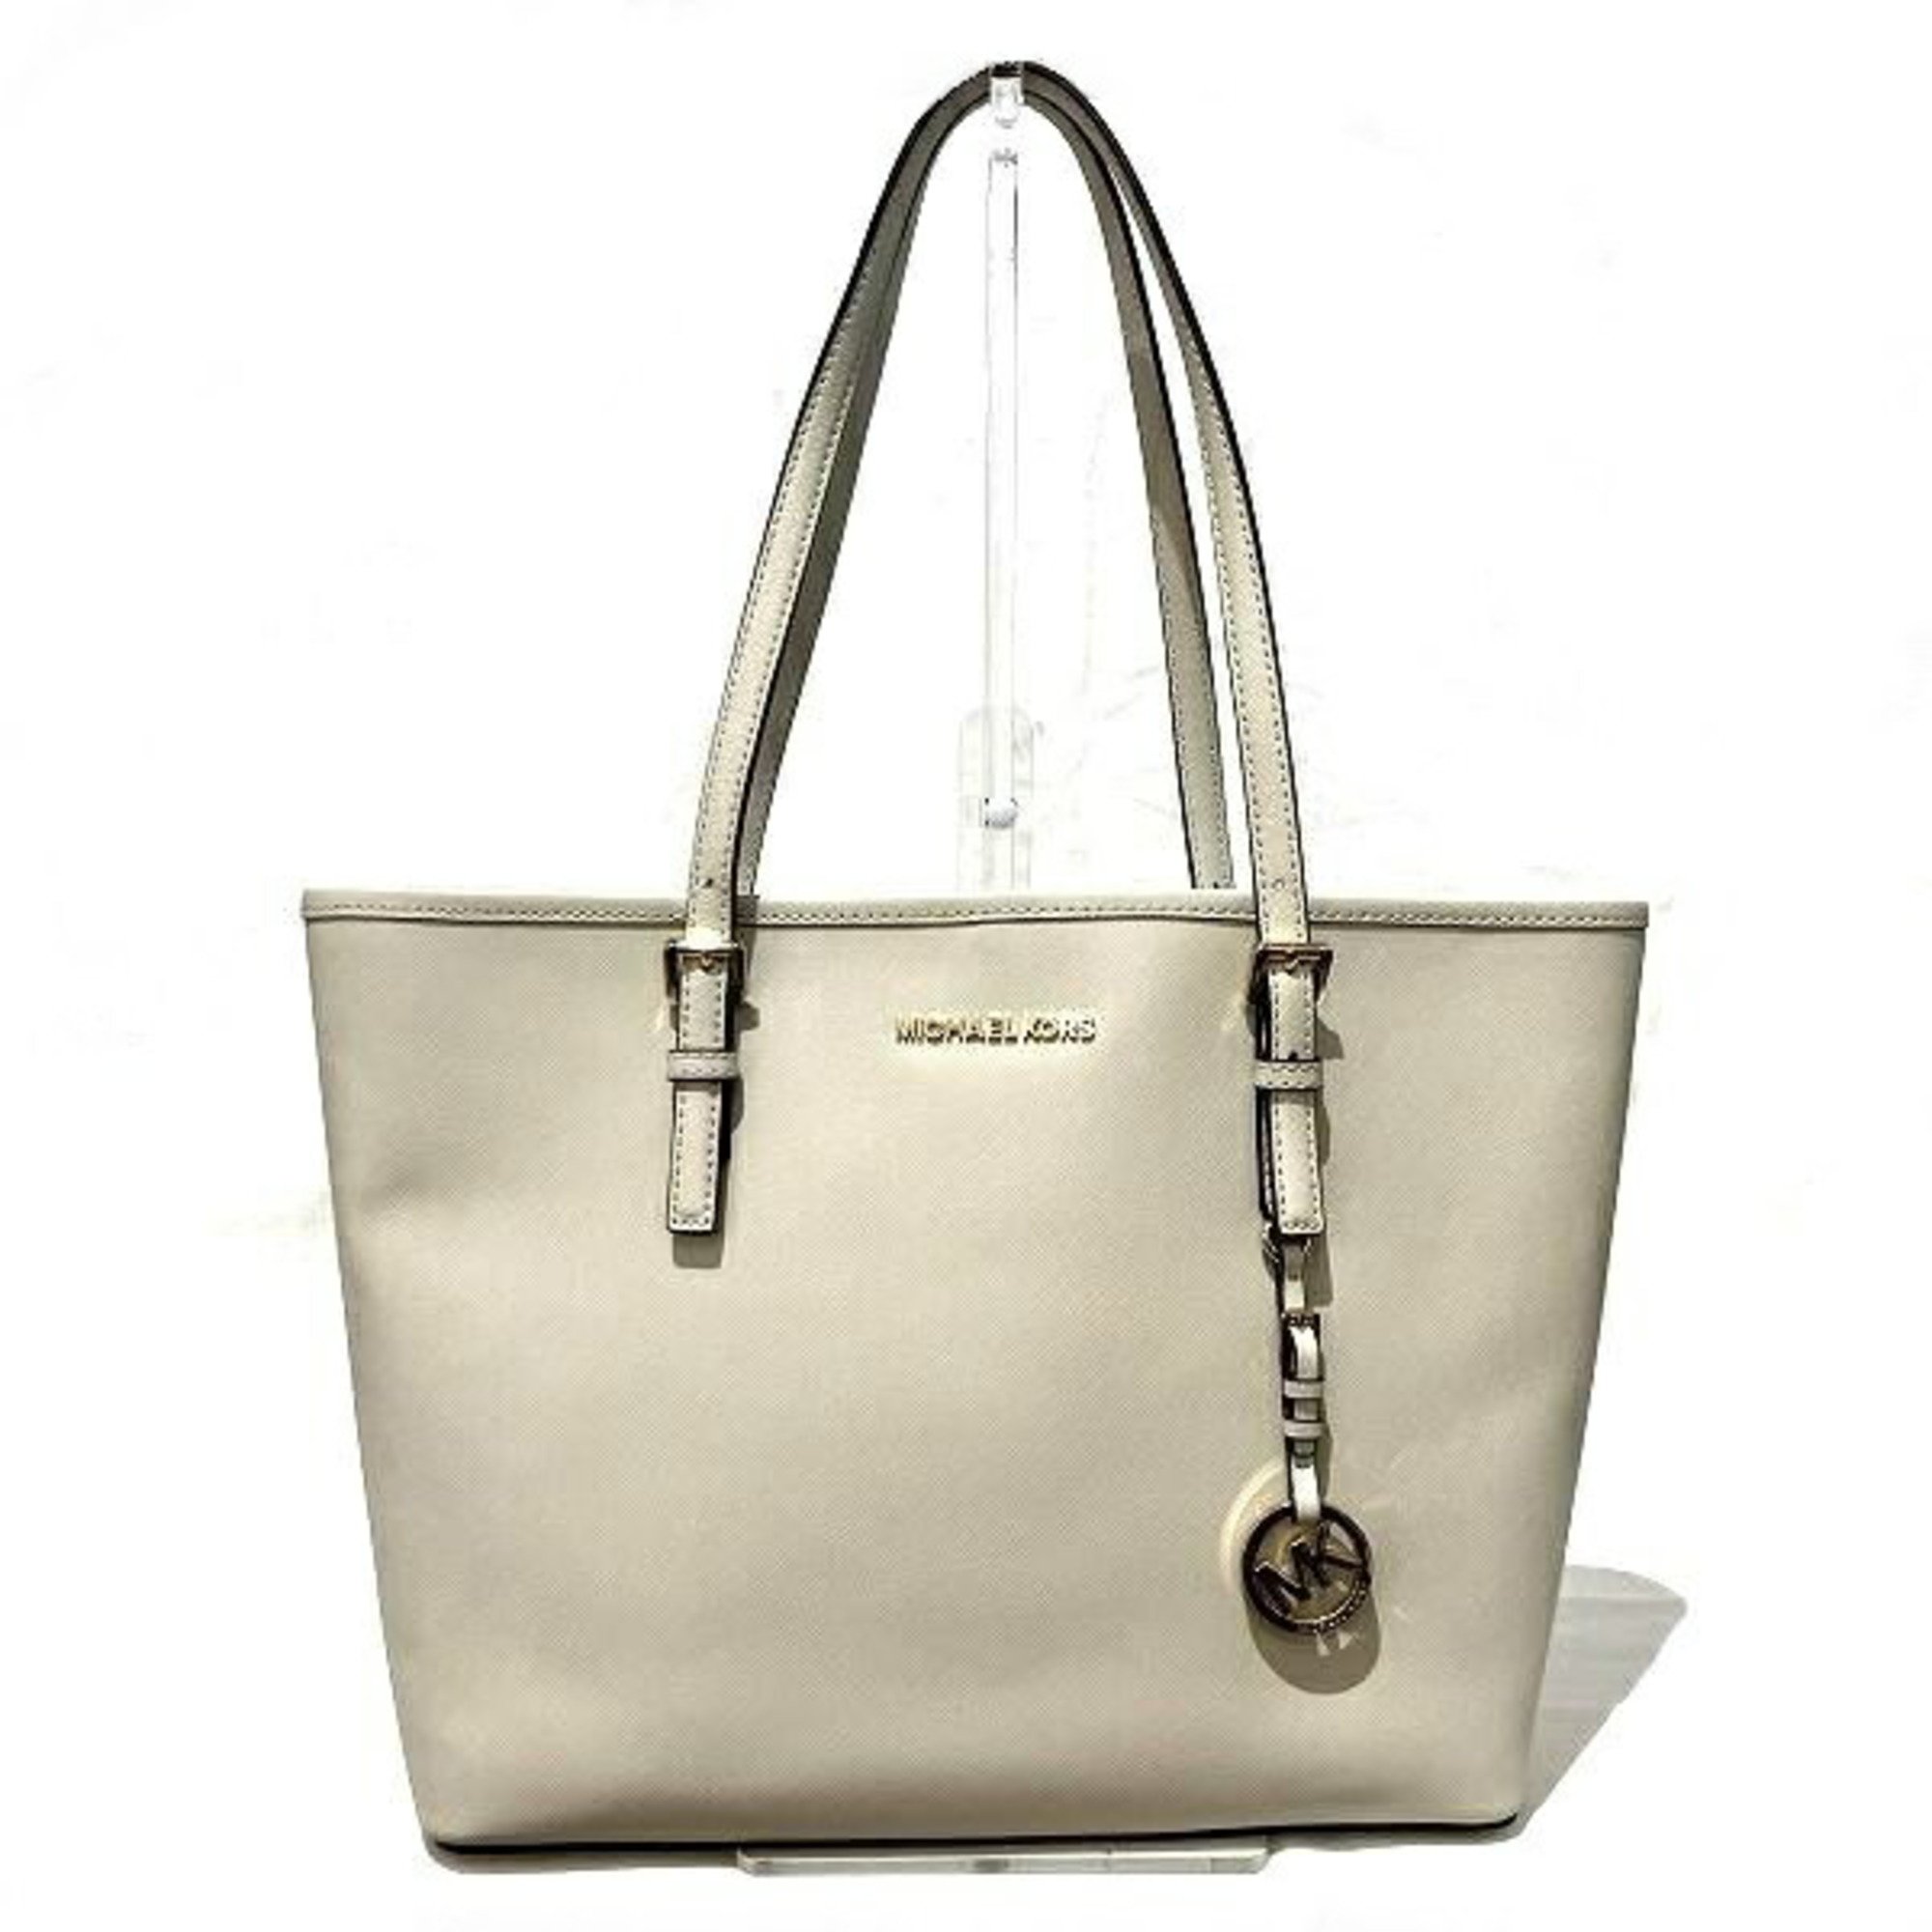 White Leather Handbag with Timeless Design